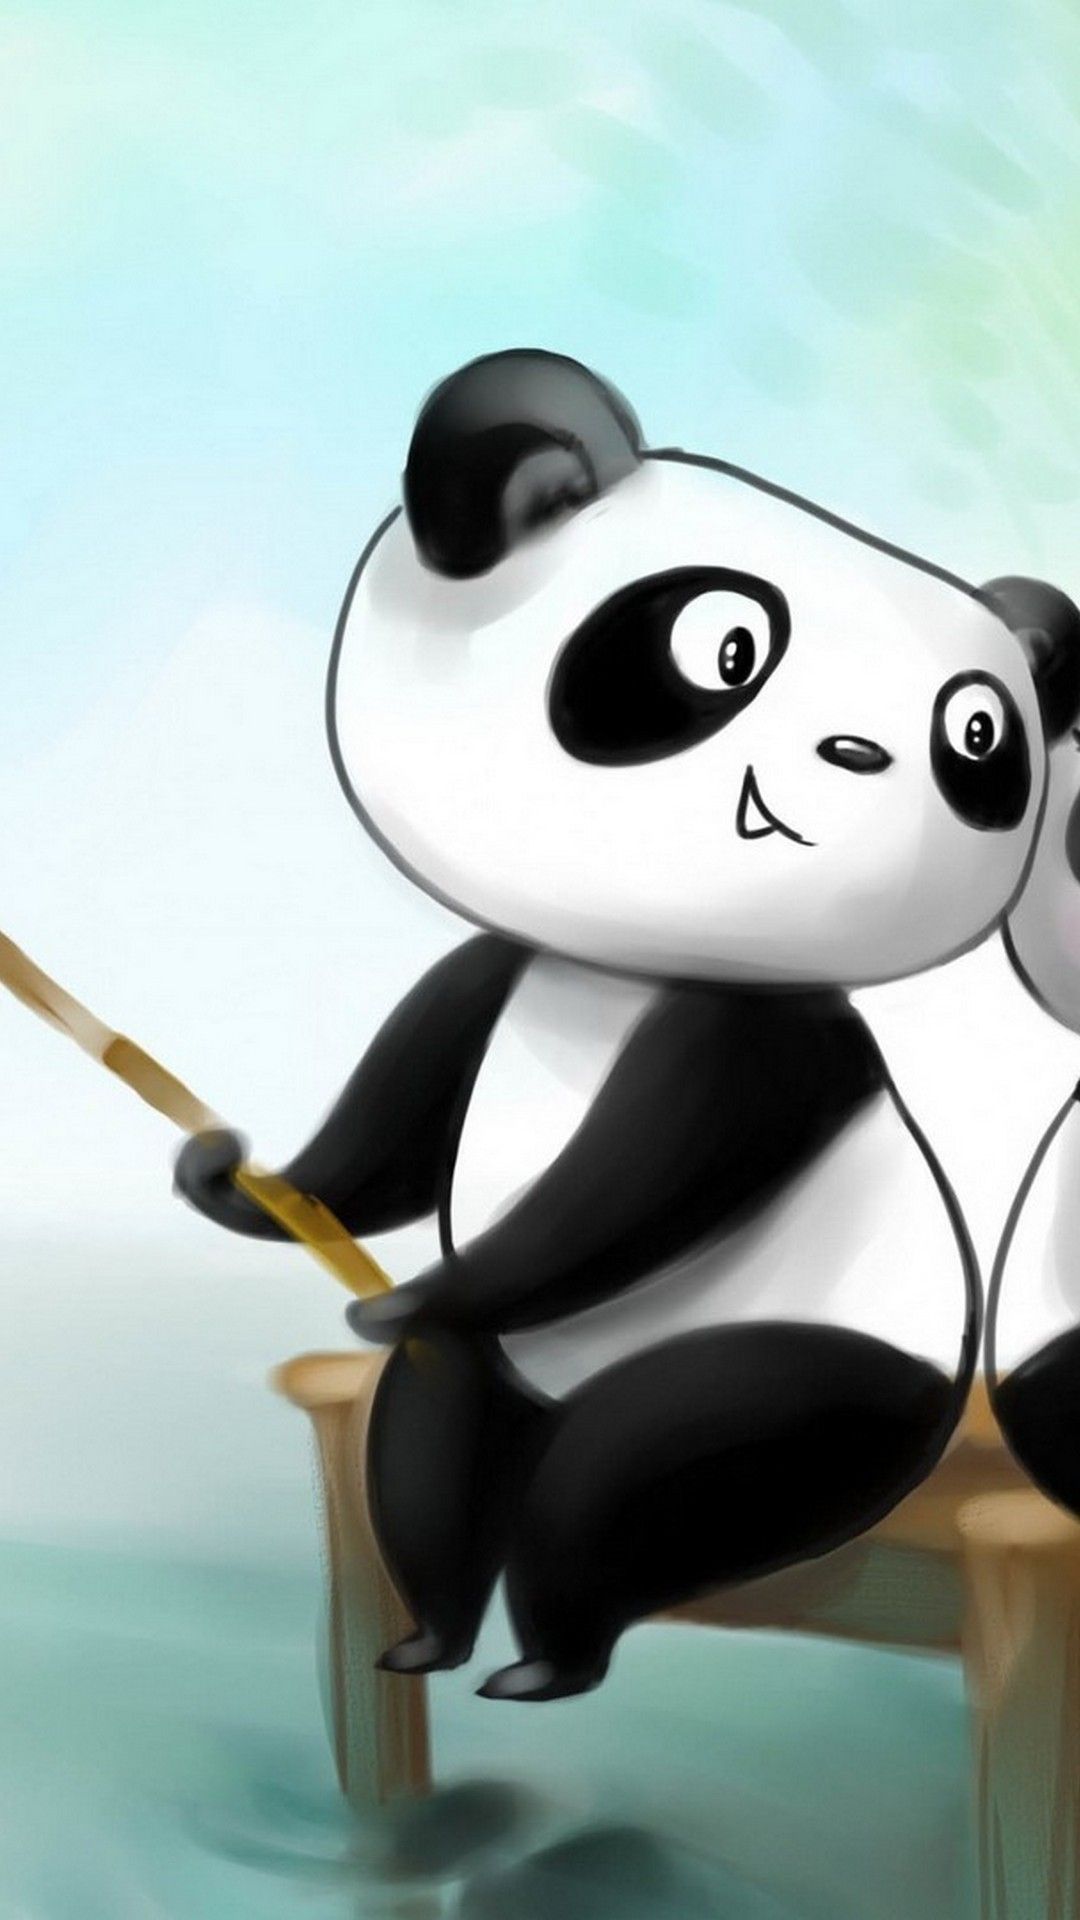 Cute Panda Wallpaper para Android - 2019 fondos de pantalla de Android